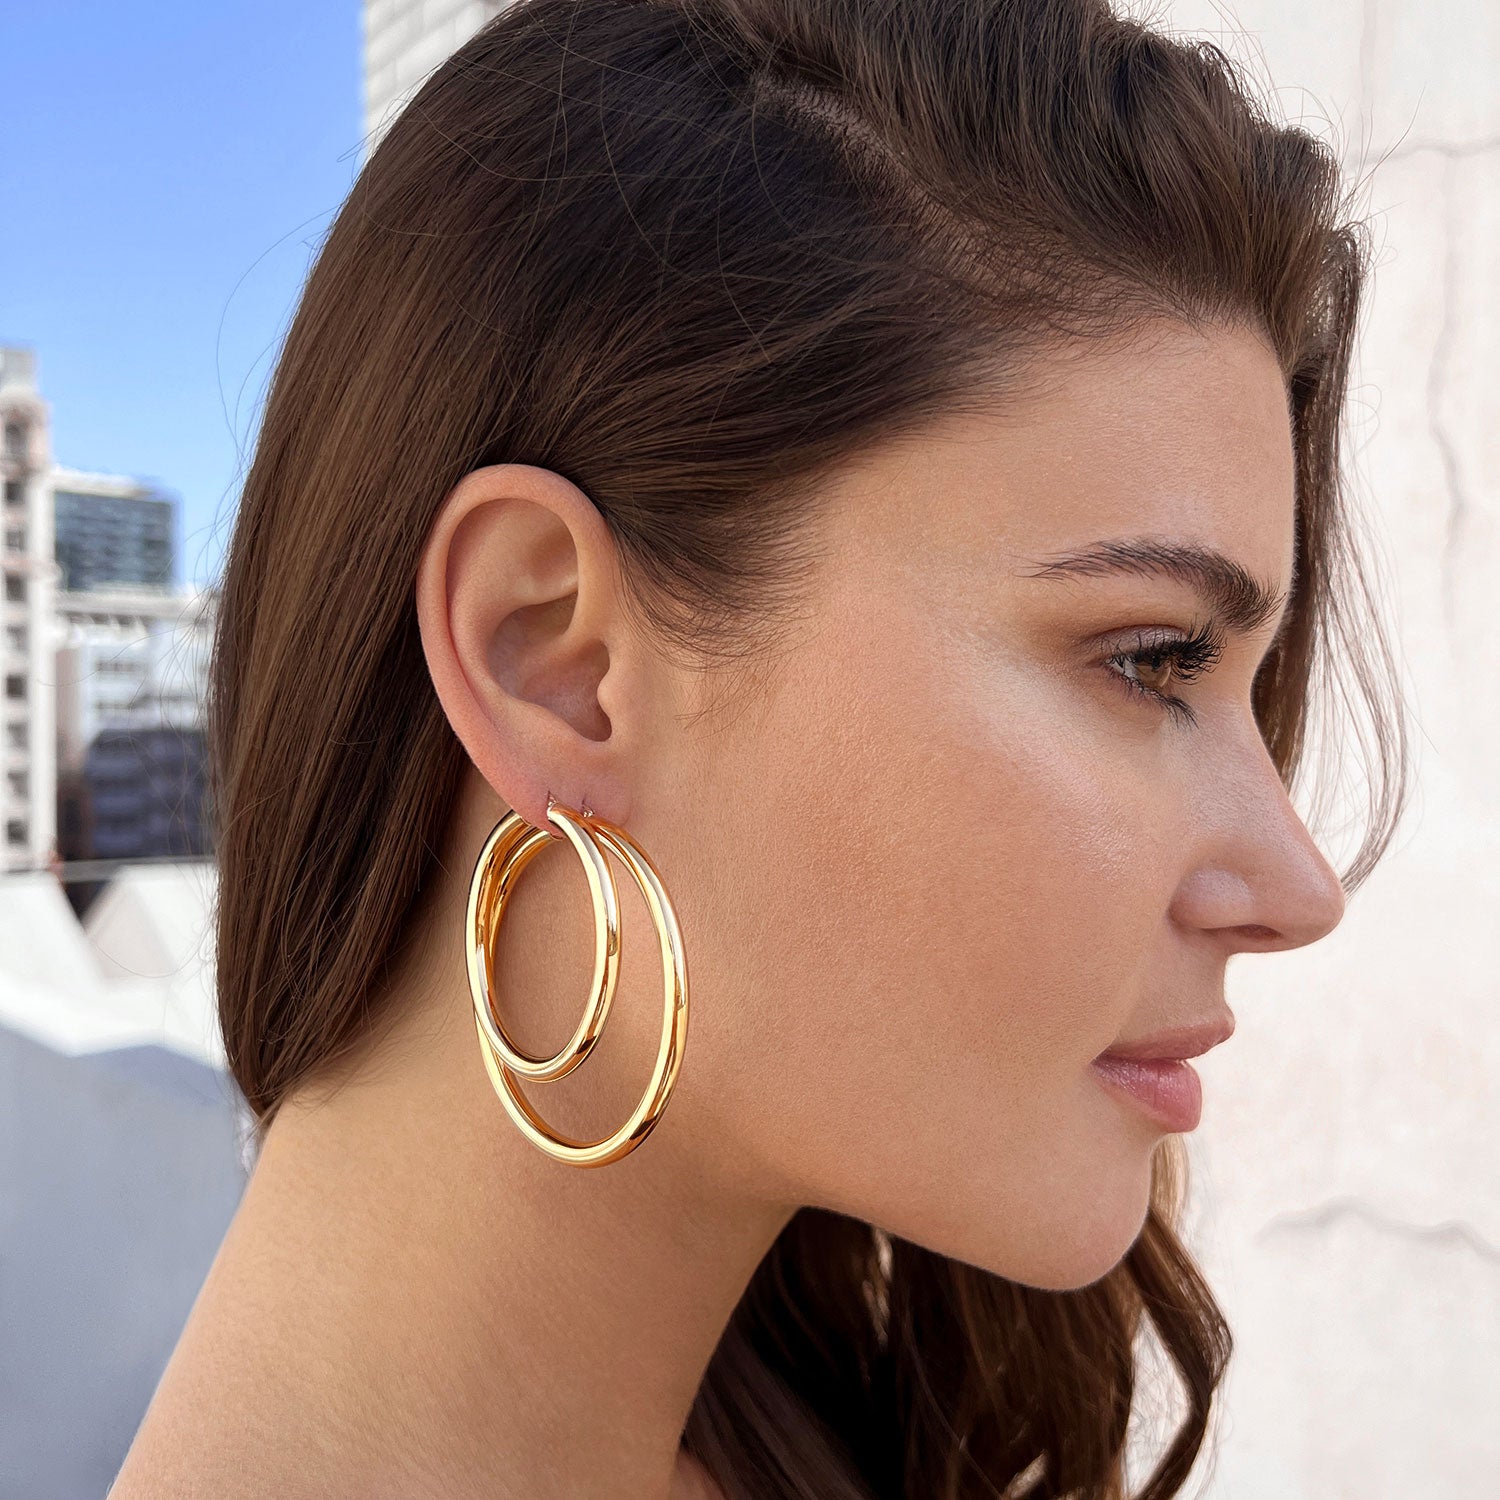 Elaborate Peacock Design 22K Gold Earrings